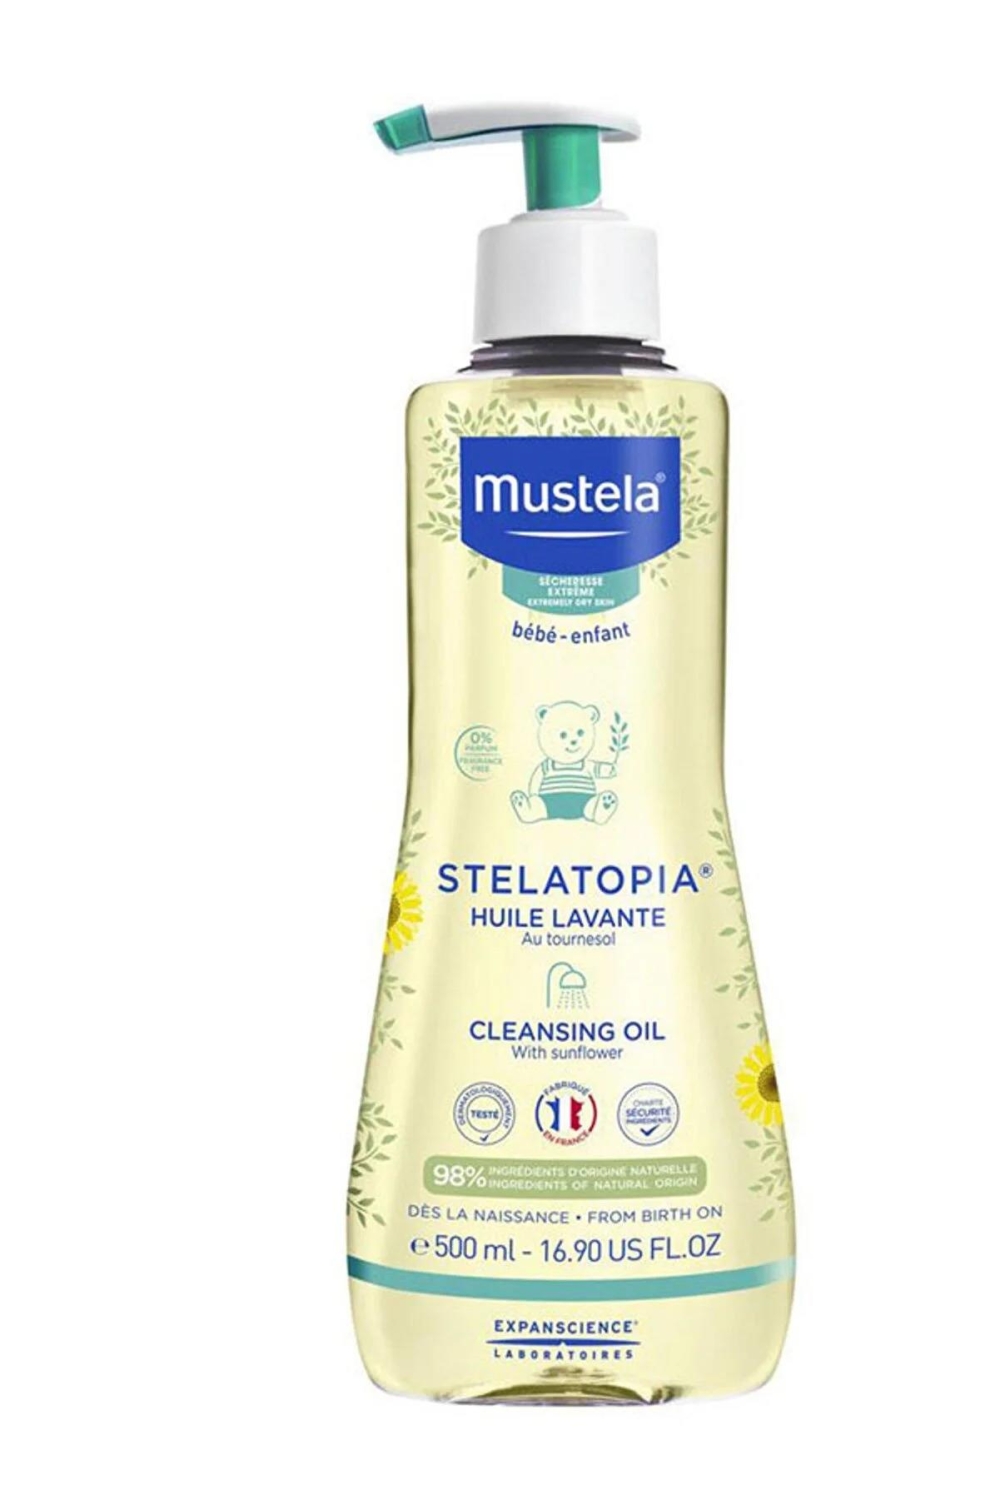 Mustela Stelatopia очищающее масло 500 мл очищающее масло очищающее масло 500 мл mustela bebe enfant